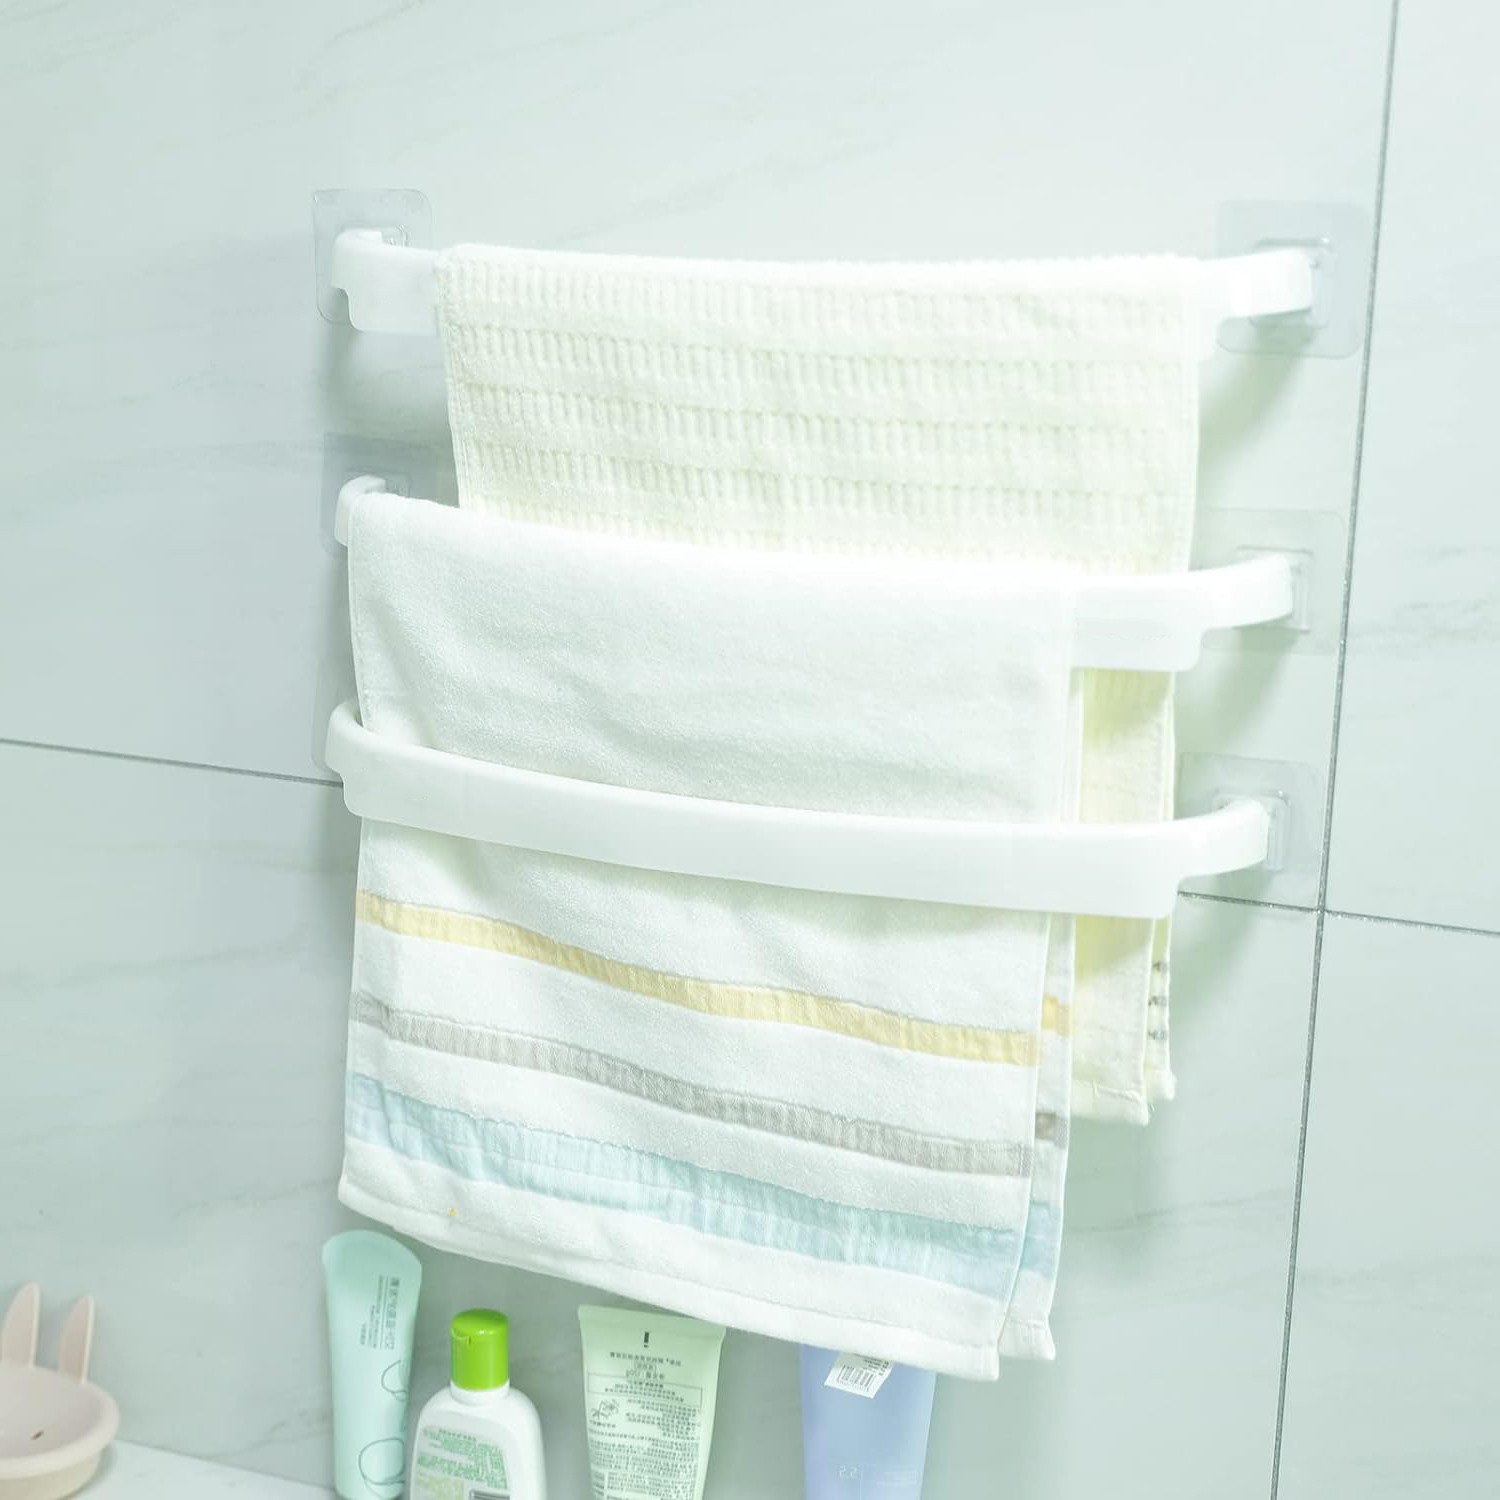 Kuber Industries Towel Hanger for Bathroom|Wall Mounted Cloth Hanger|Multipurpose Cloth & Napkin Holder|Premium PP Material|Self-Adhesive DIY Installation|Pack of 3|White